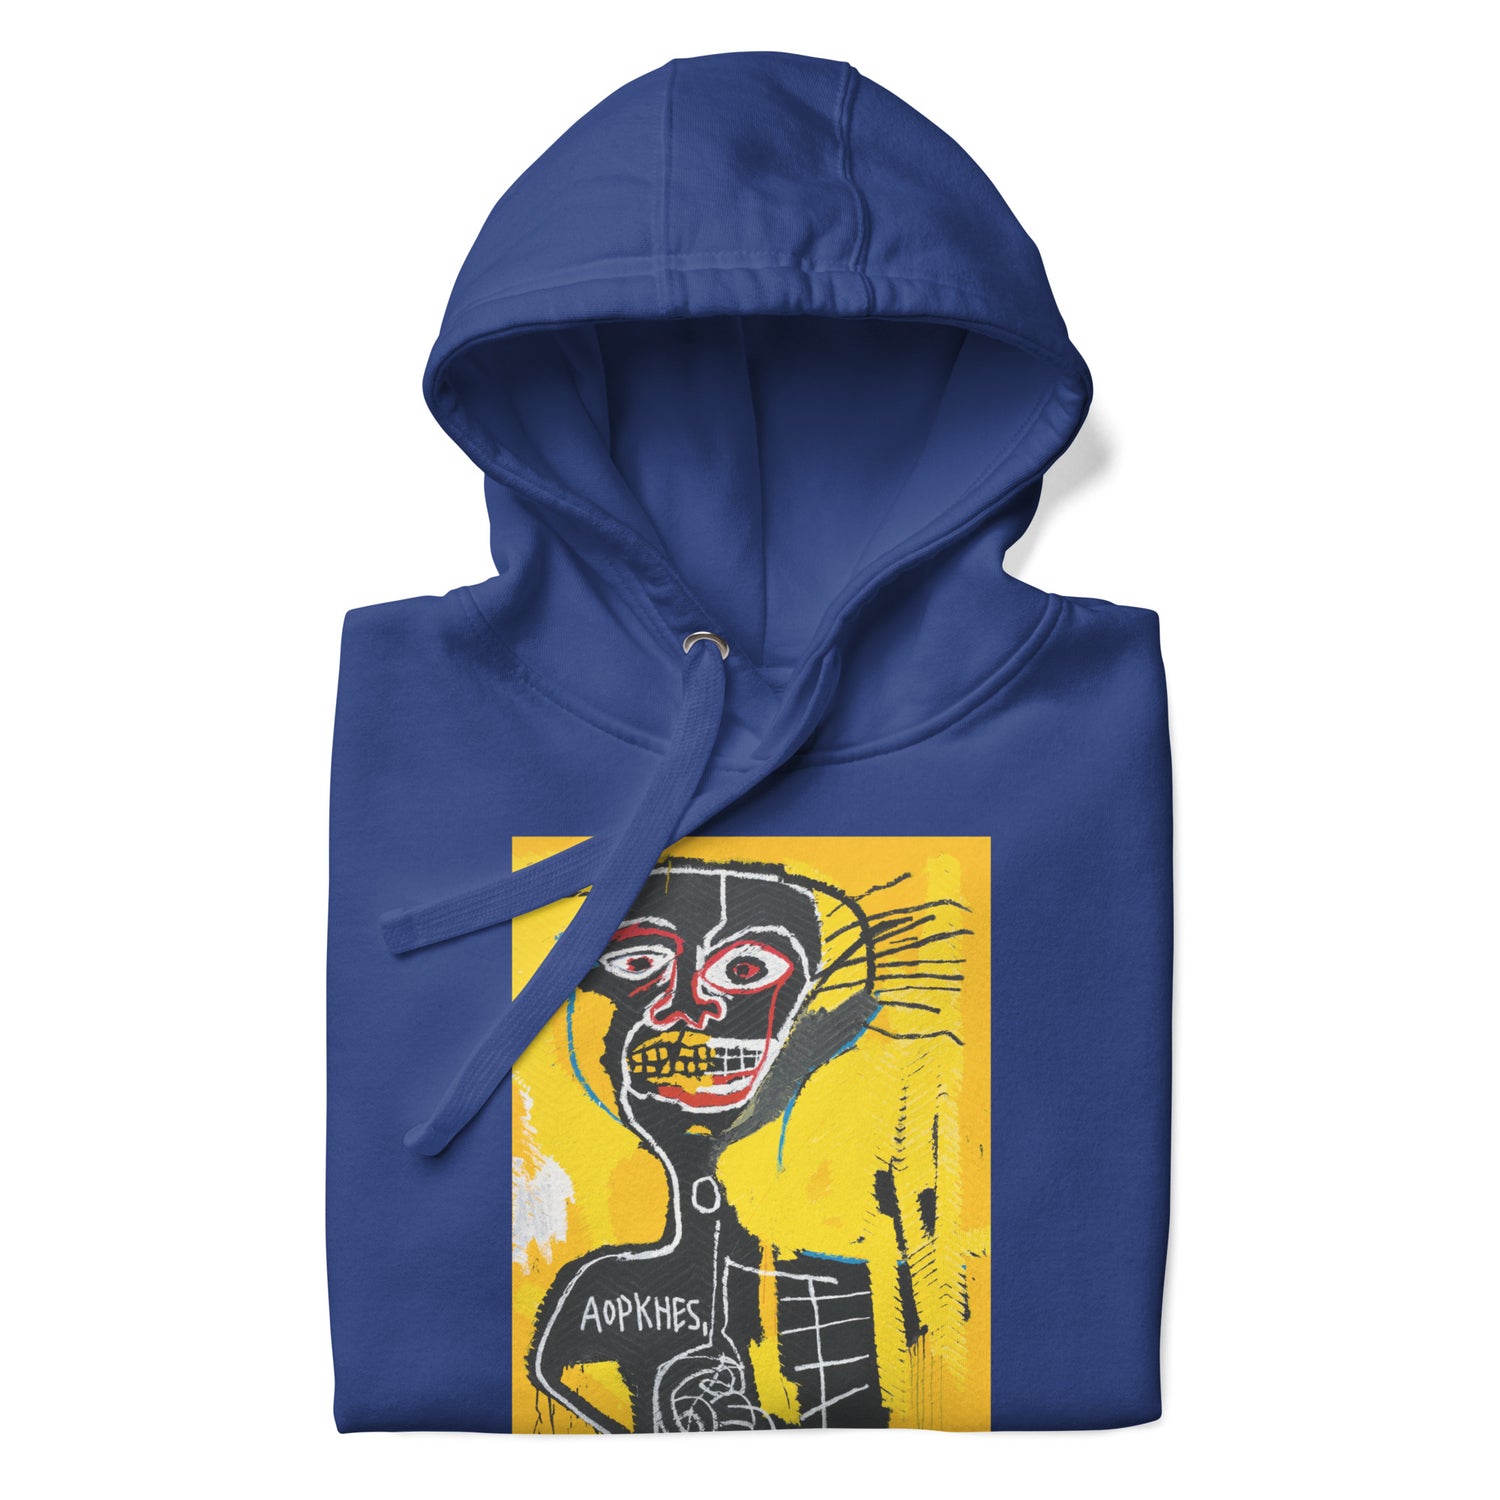 Jean-Michel Basquiat "Cabeza" Artwork Printed Premium Streetwear Sweatshirt Hoodie Royal Blue